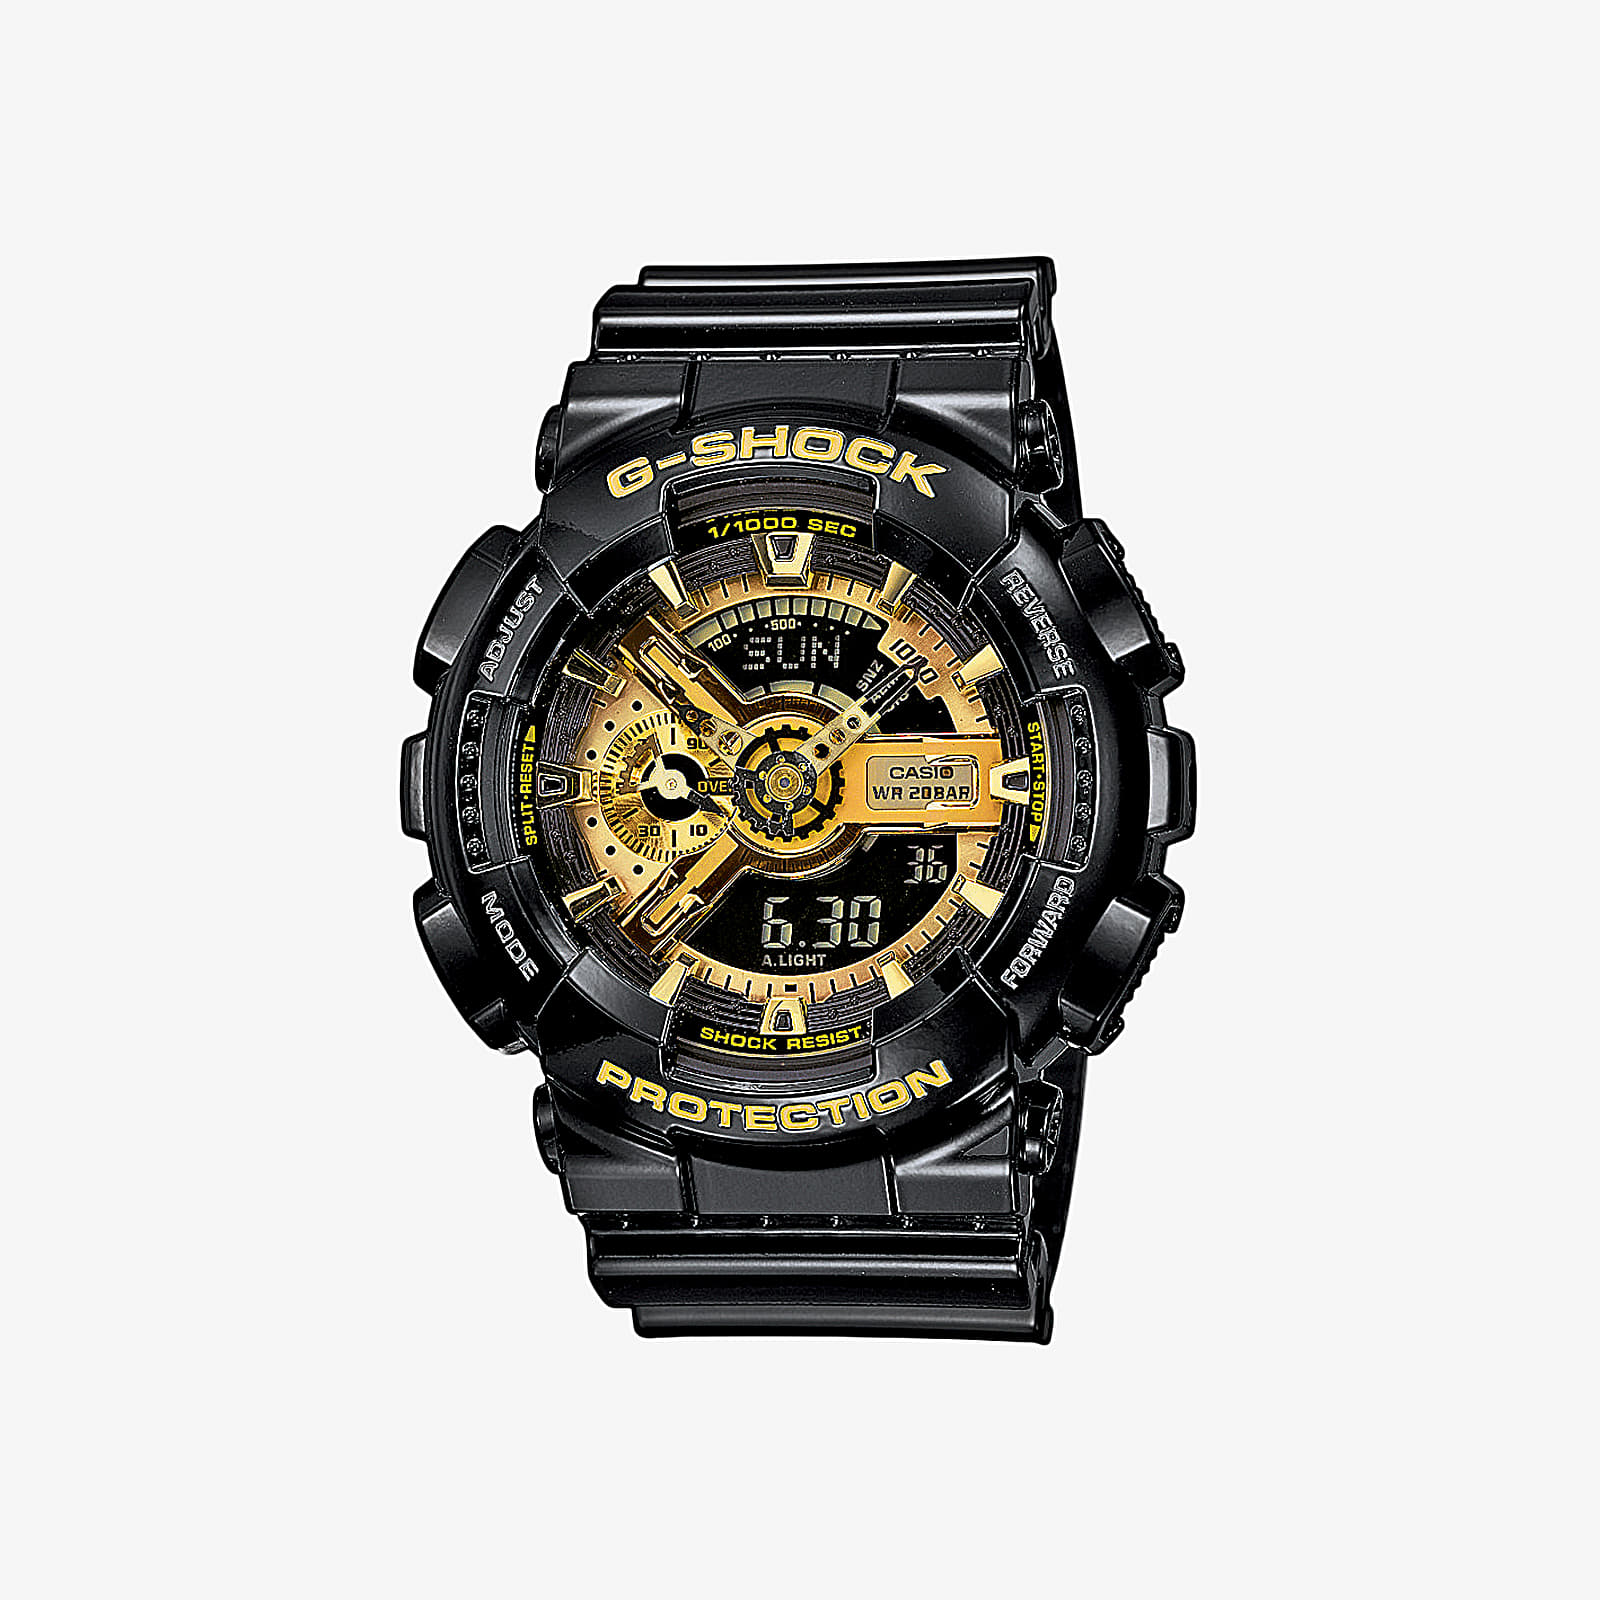 Relojes Casio G-Shock GA-110GB-1AER Watch Black